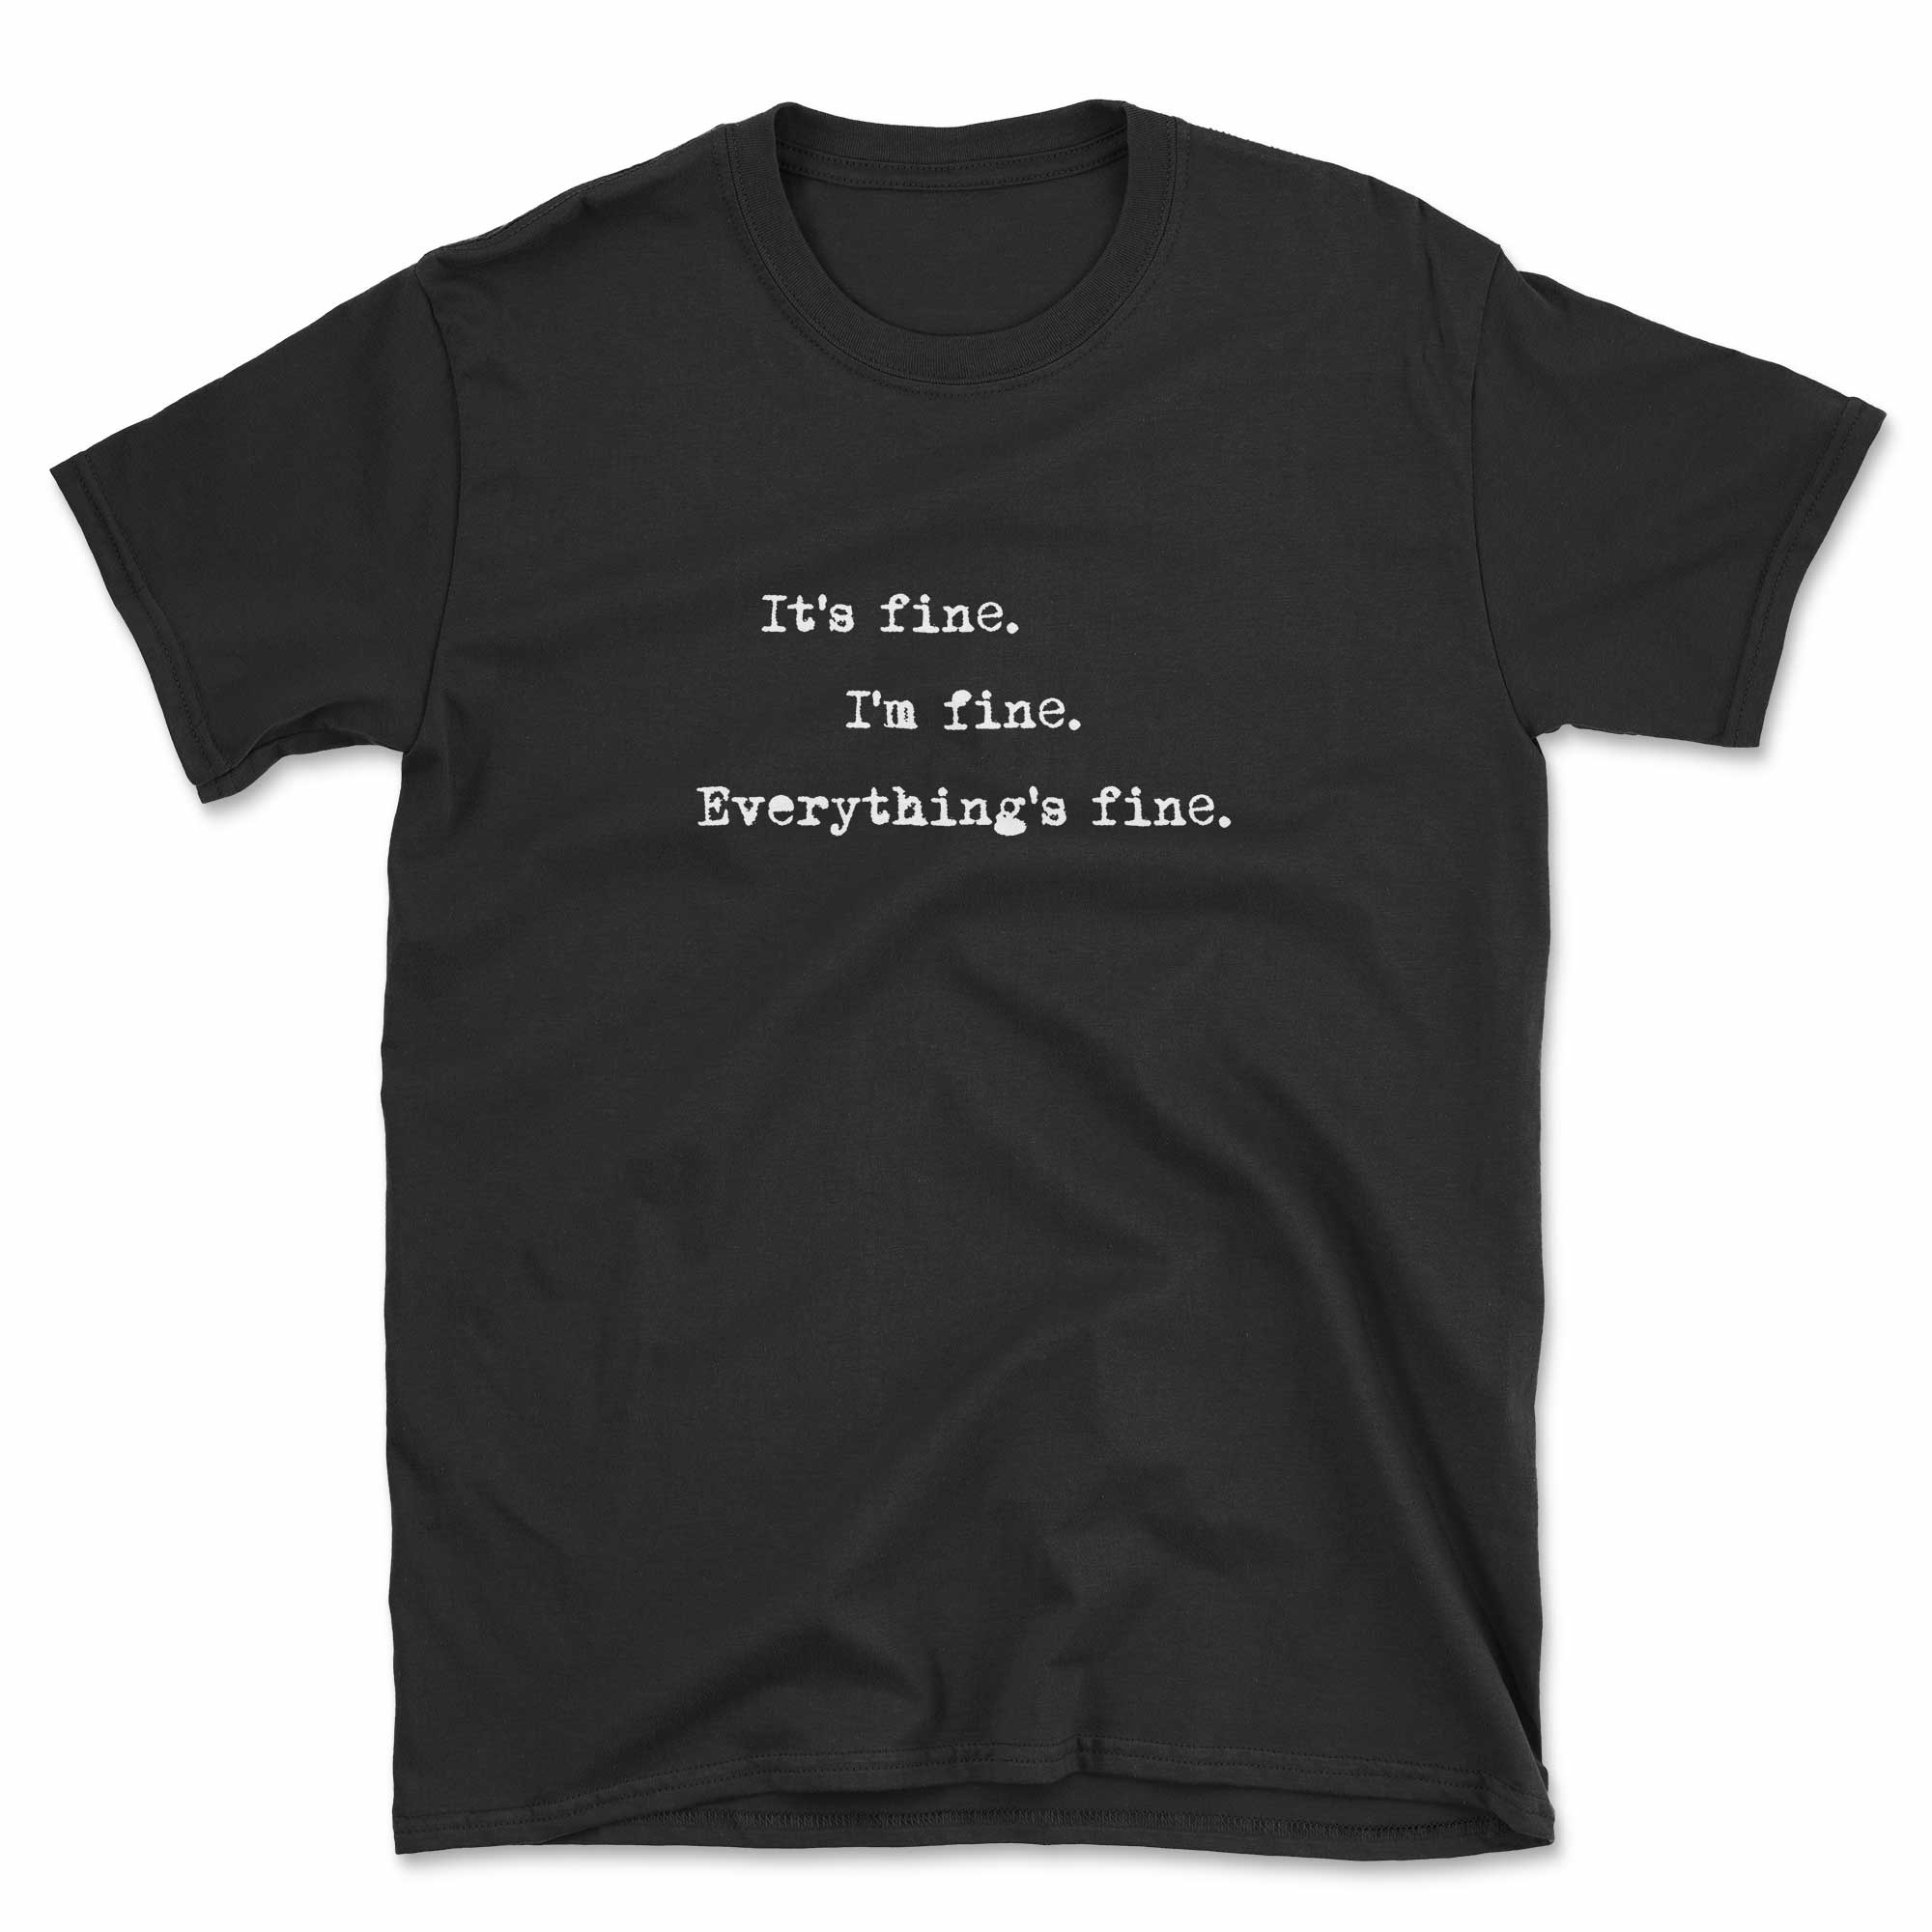 It's fine. I'm fine. Everything's fine. T-Shirt